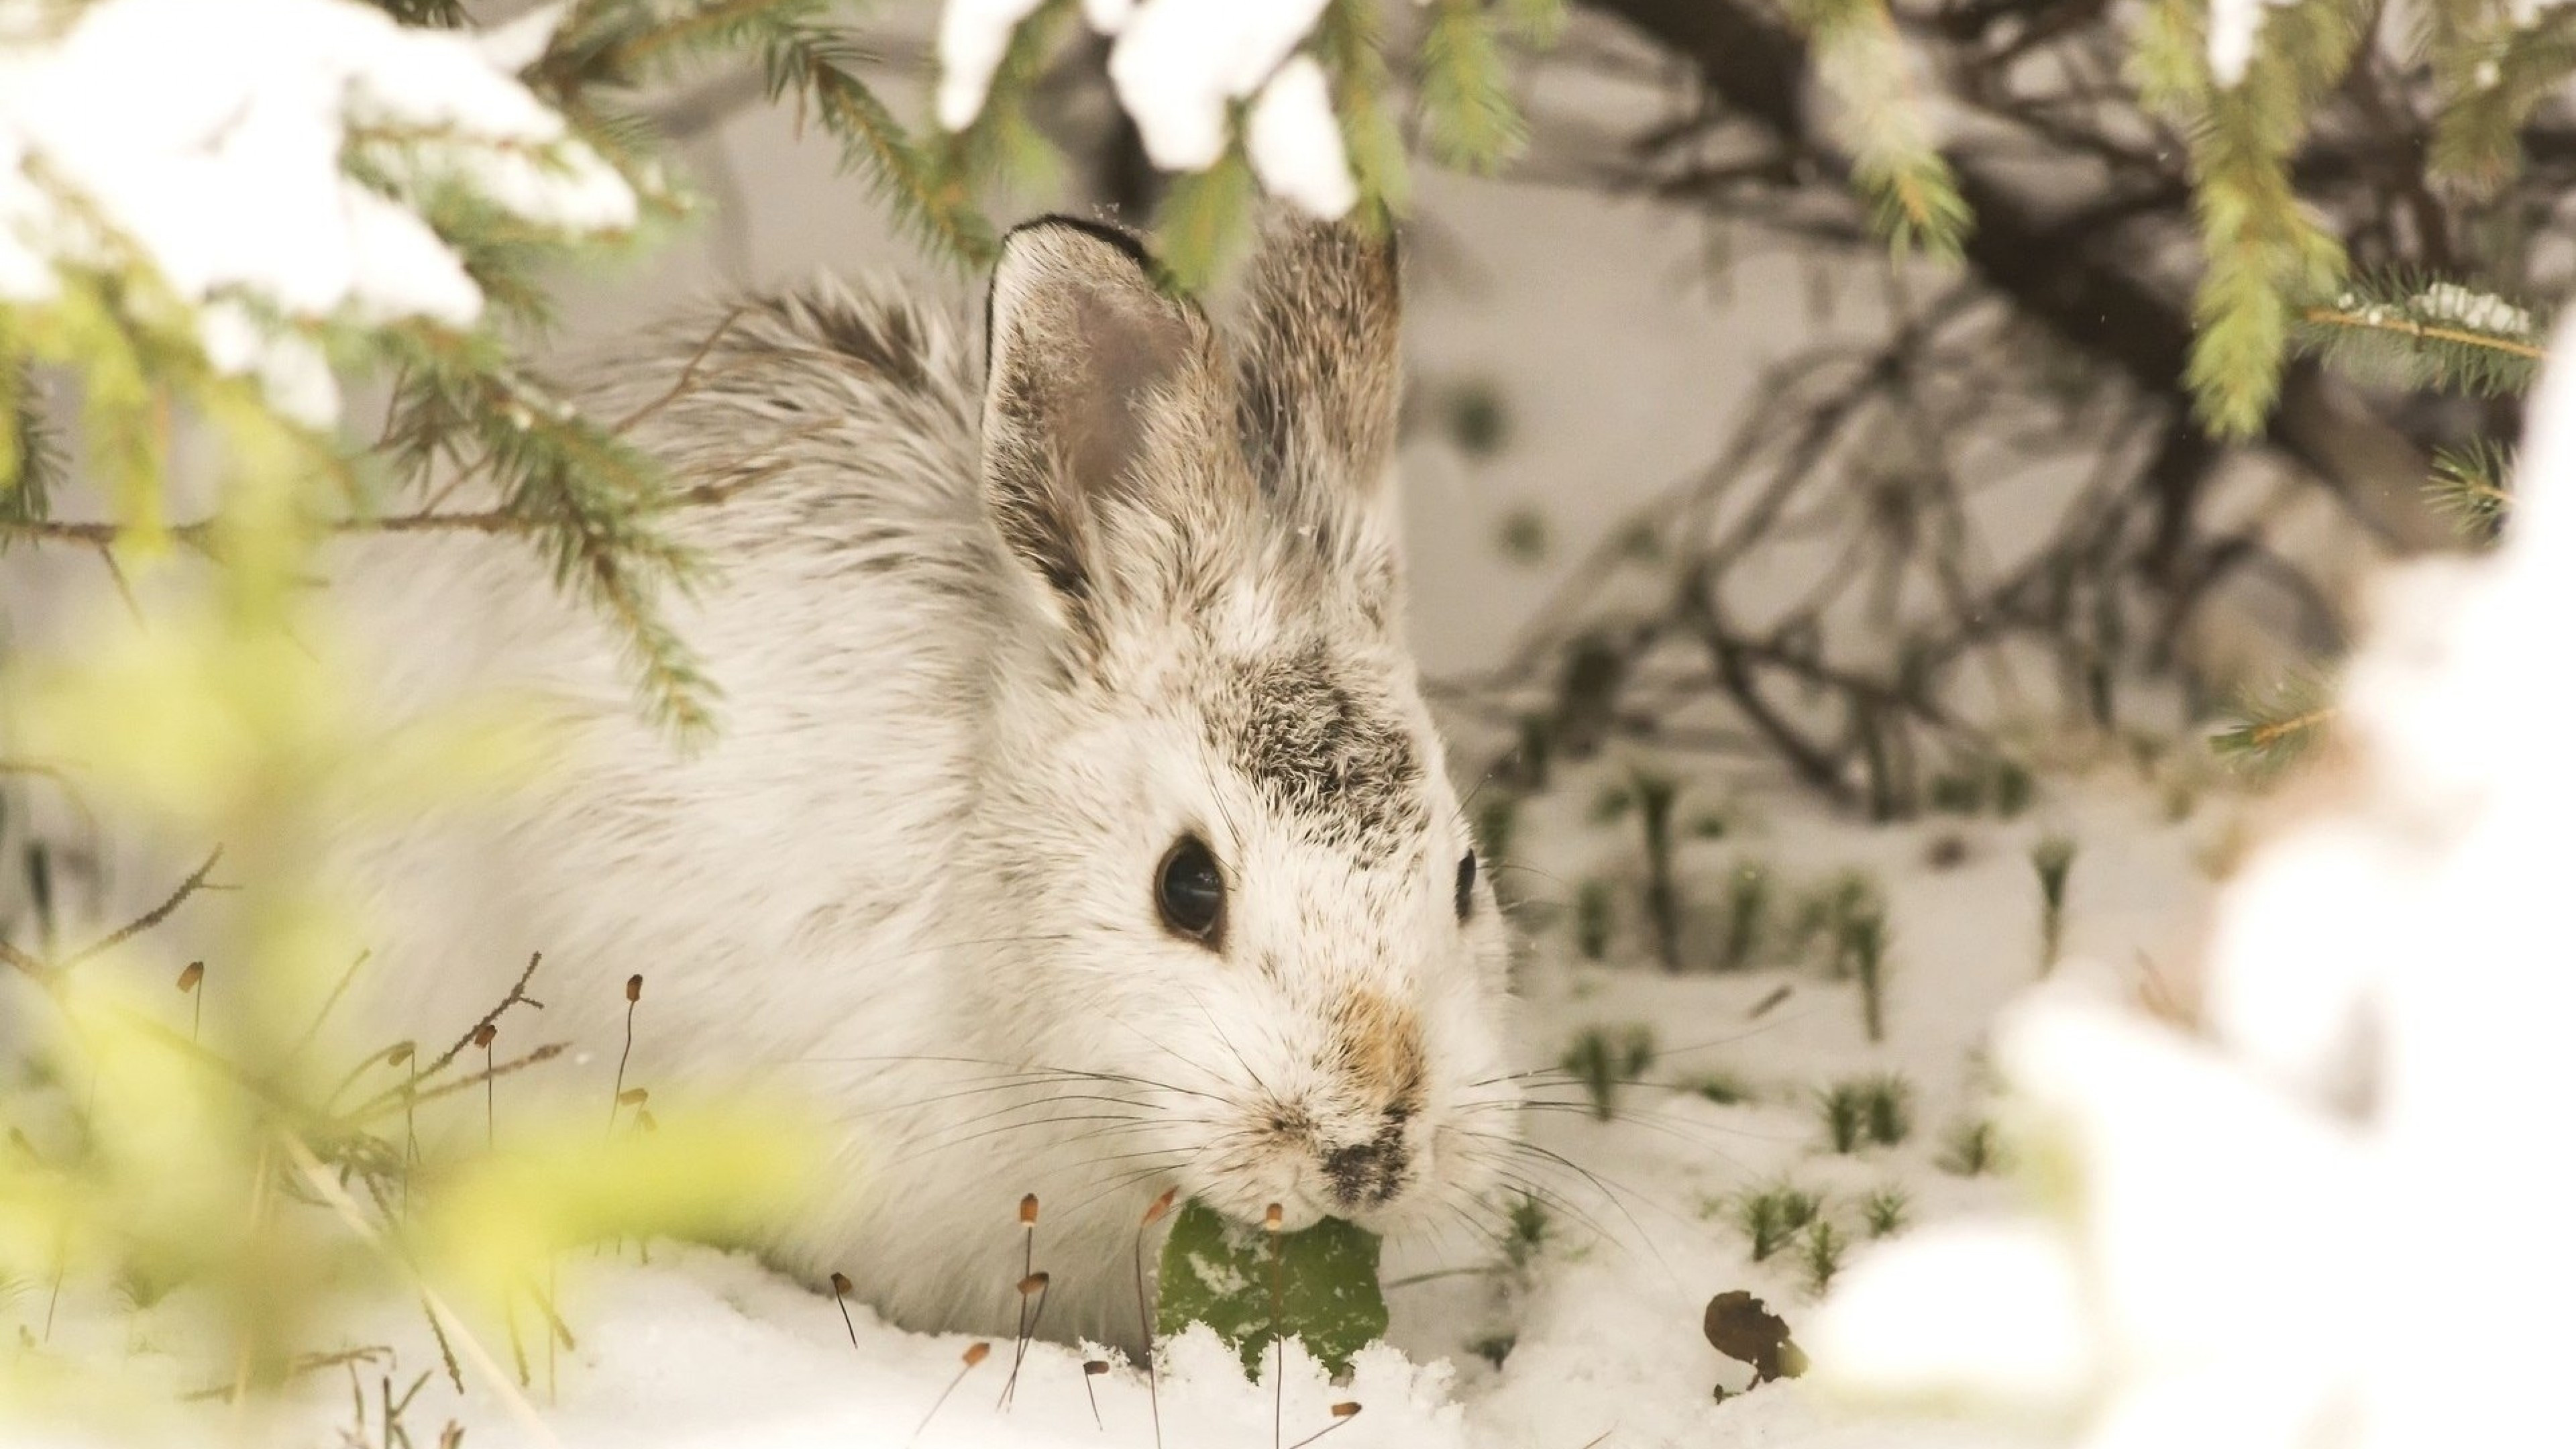 Winter wildlife wallpapers, Rabbit and hare, Snowy scenery, UHD TV backgrounds, 3840x2160 4K Desktop